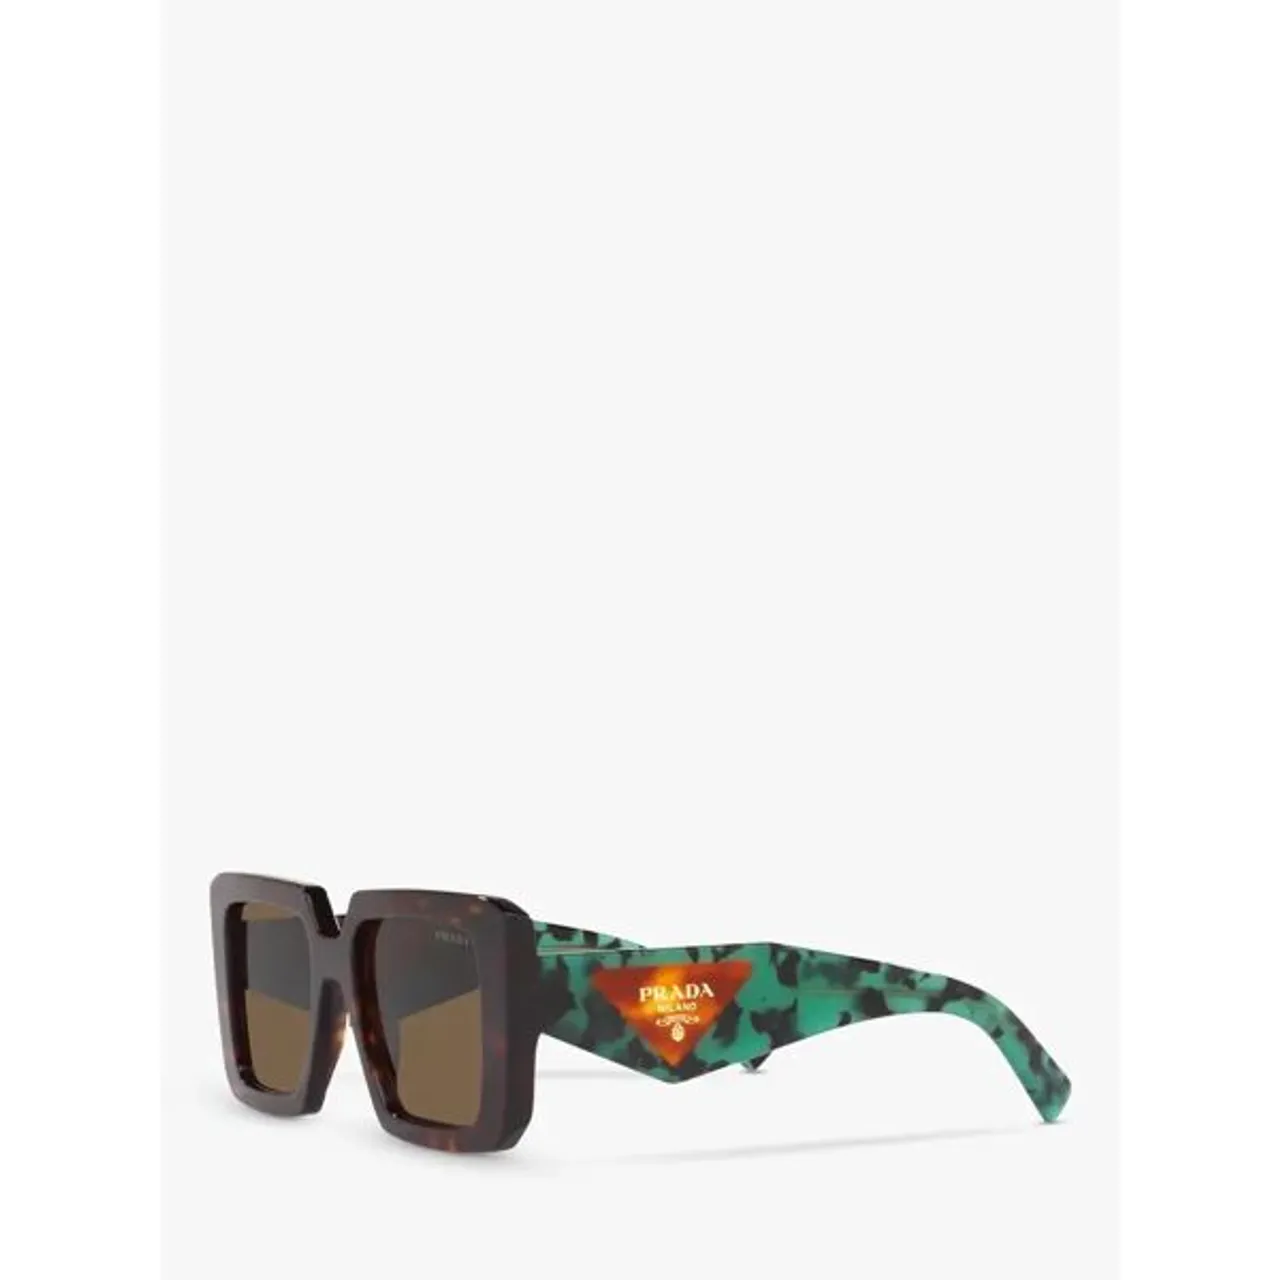 Prada PR 23YS Women's Chunky Square Sunglasses - Tortoise/Brown - Female